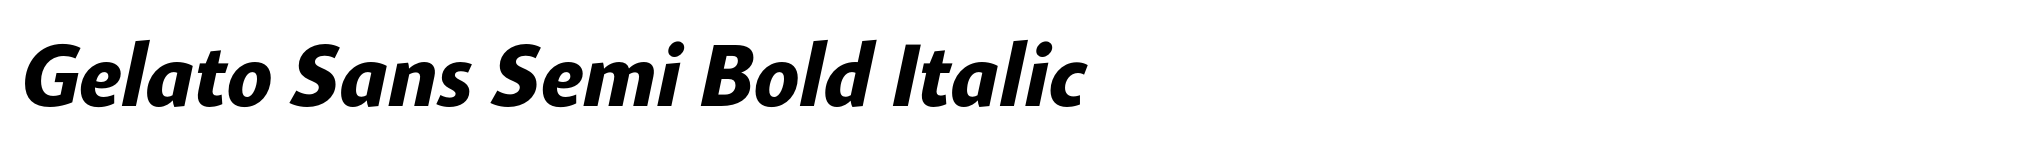 Gelato Sans Semi Bold Italic image